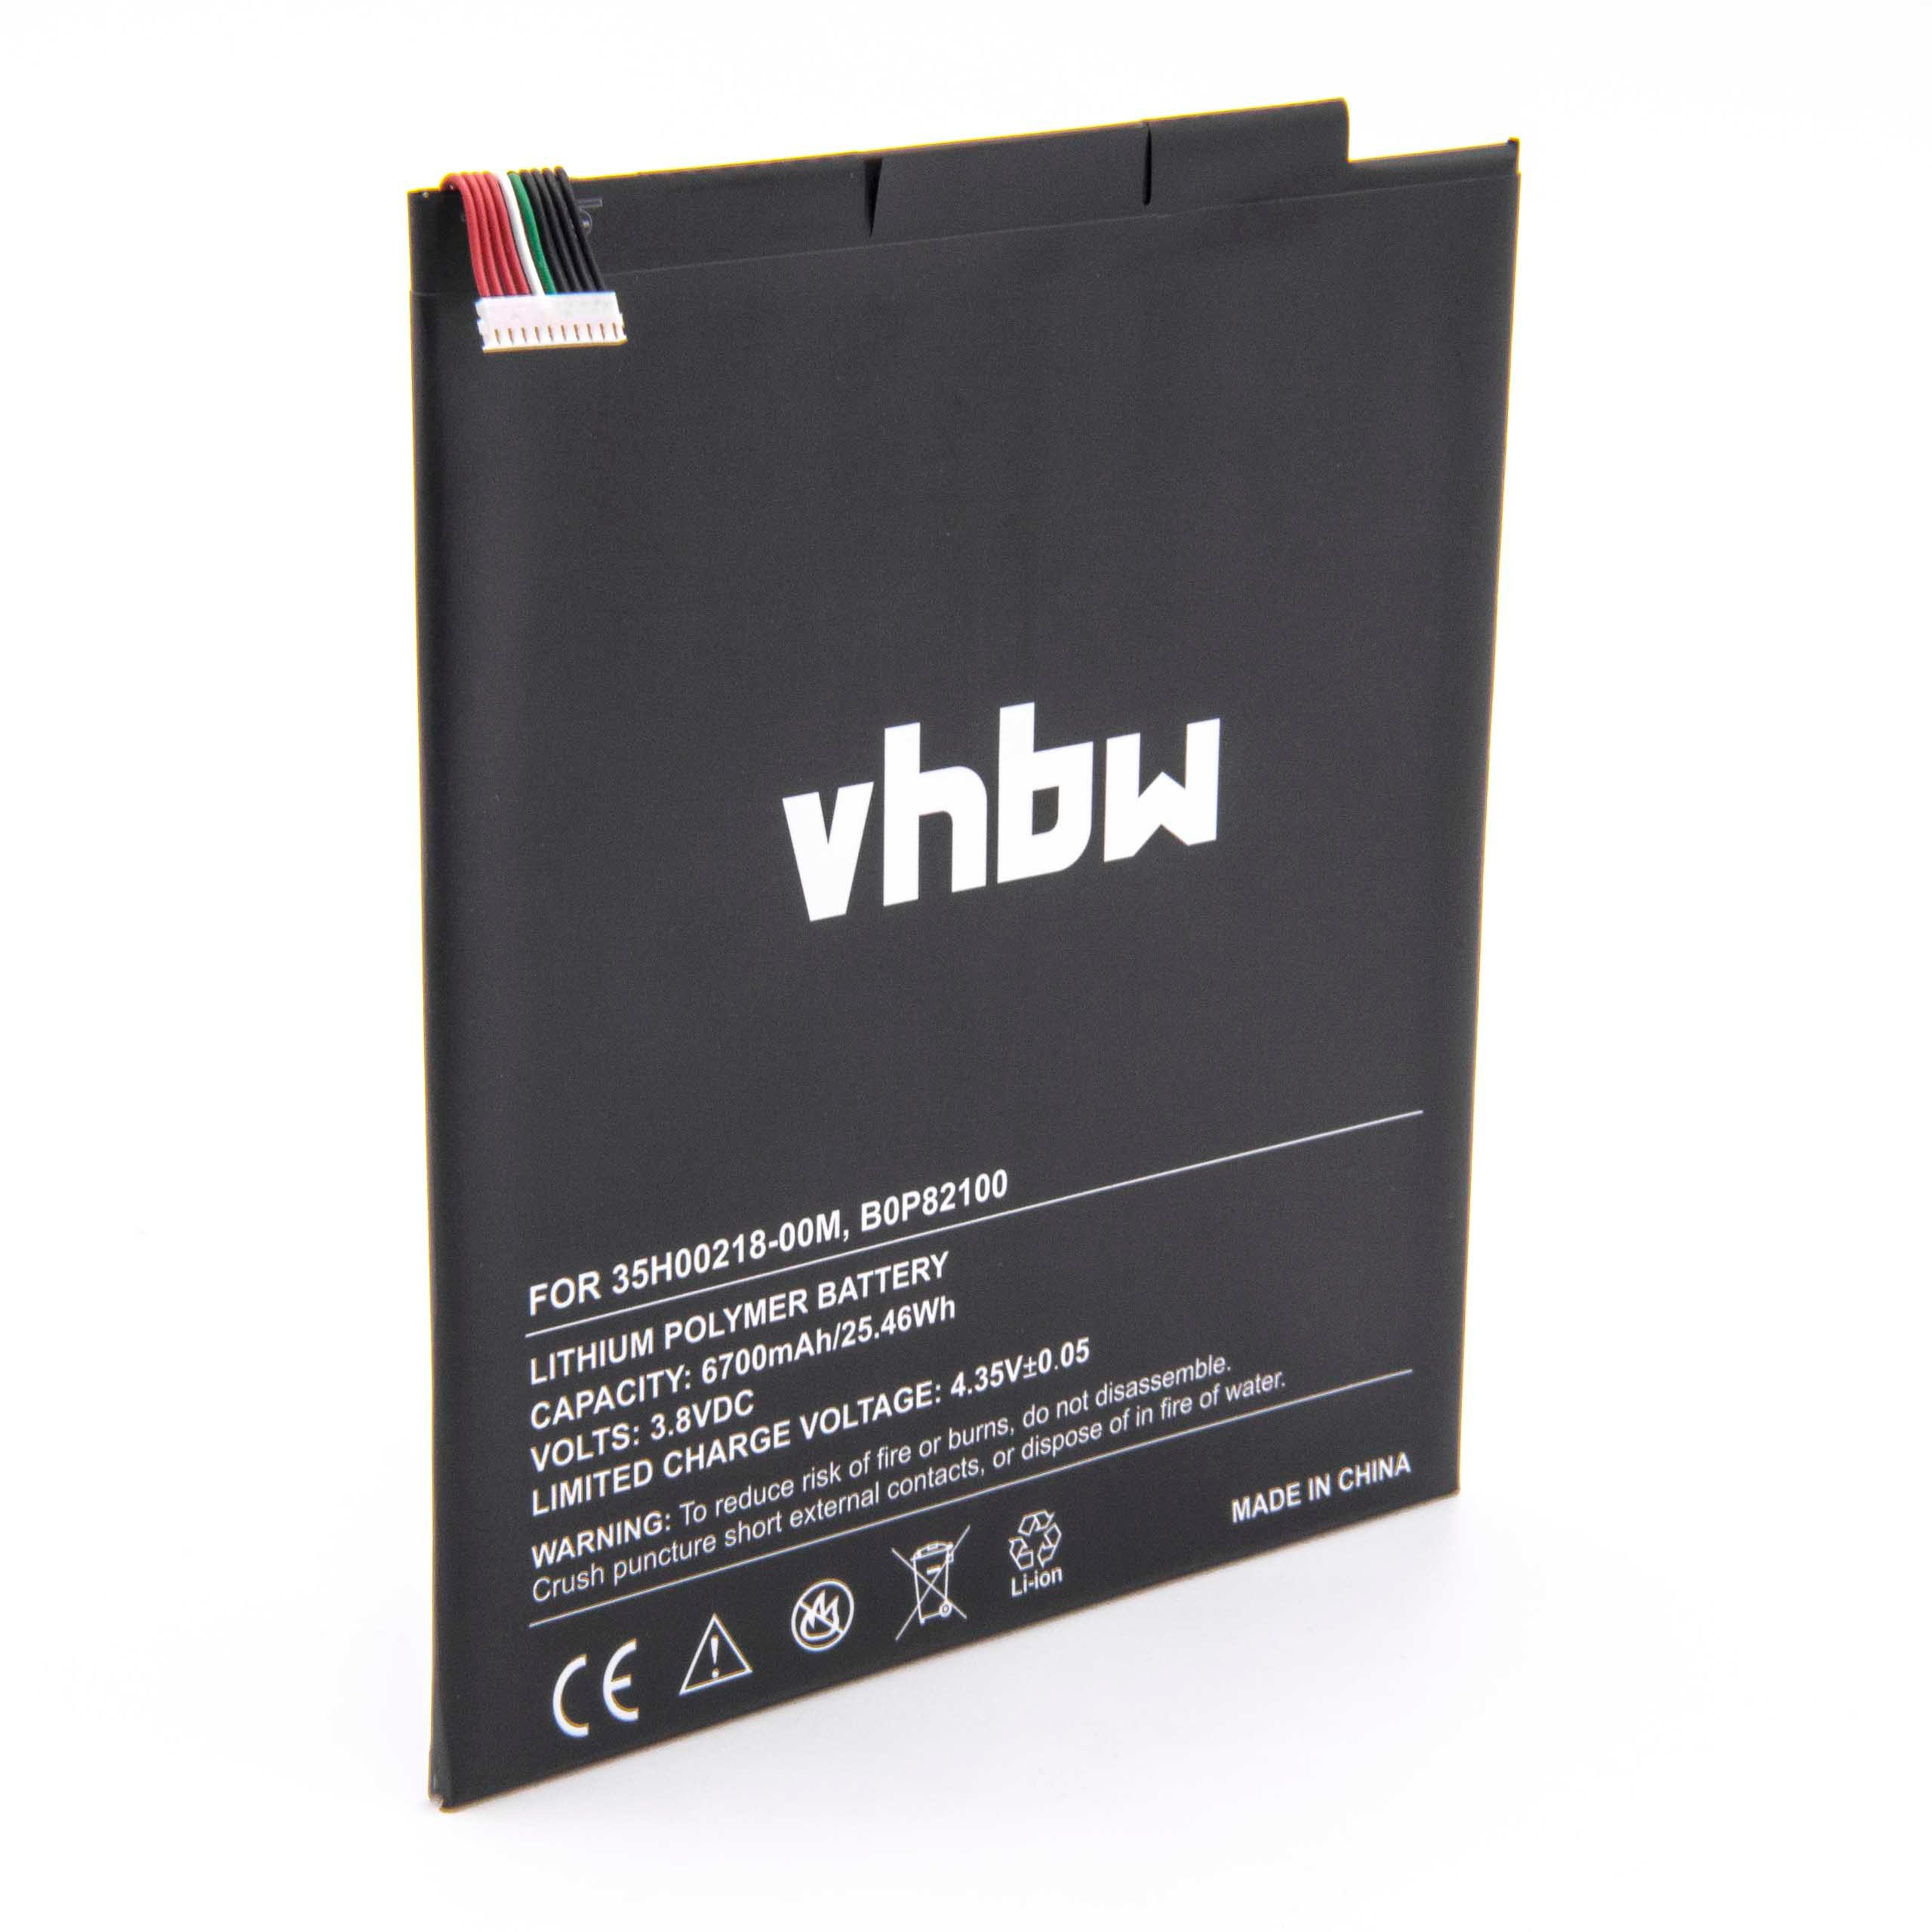 VHBW kompatibel mit Volt, HTC Tablet, Flounder Li-Polymer 6700 Akku - 3.8